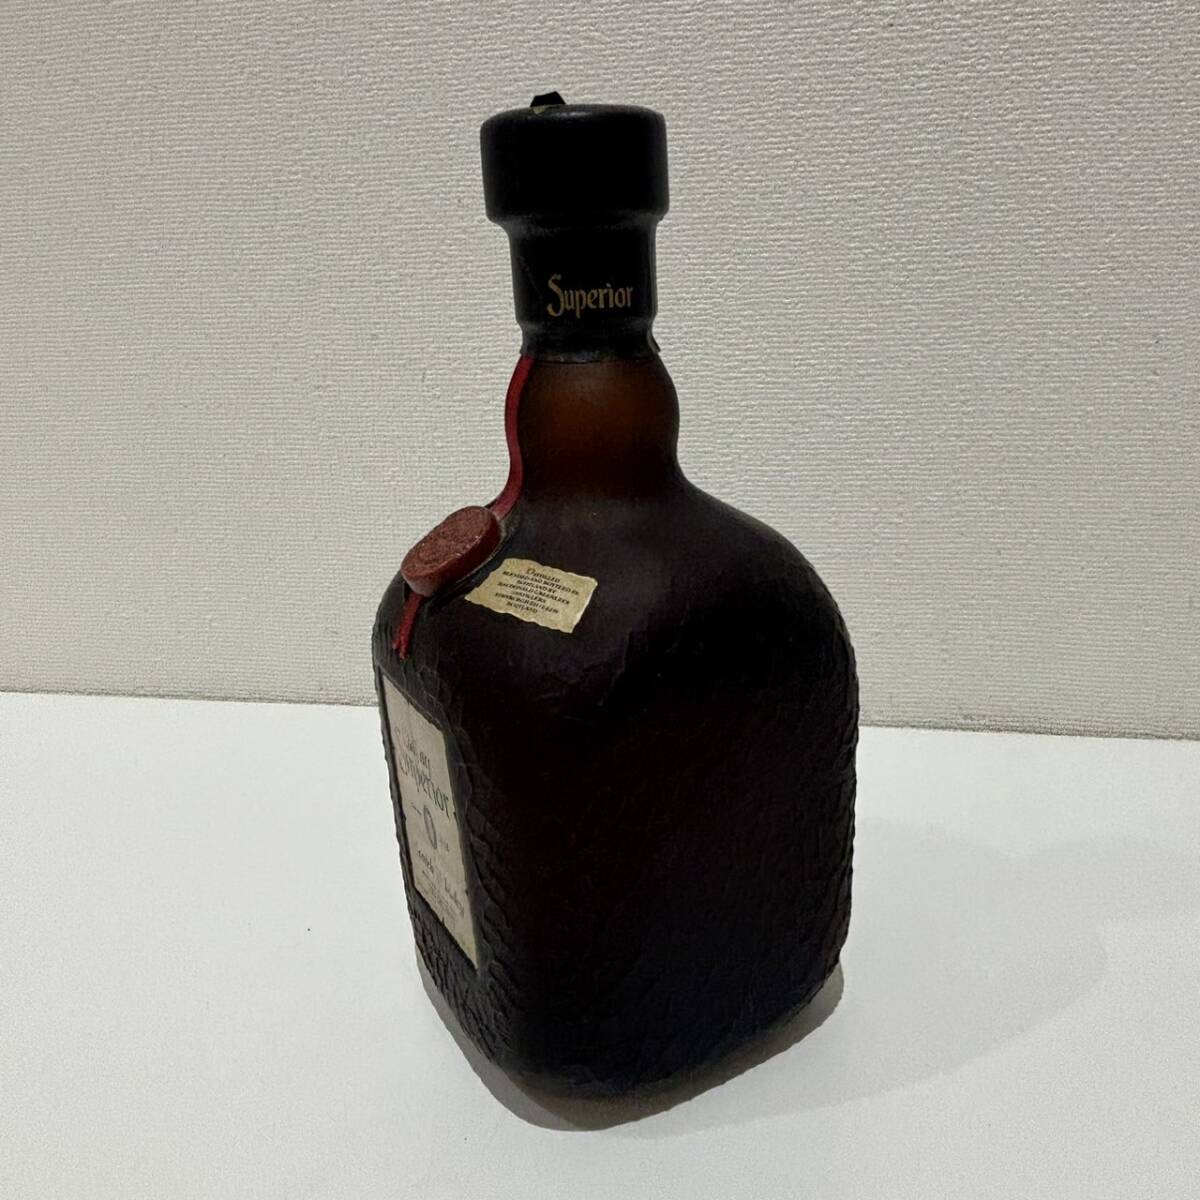 【AMT-10658】オールドパー スペリオール Old Parr Superior 750ml 43% スコッチウイスキー 未開栓 古酒 お酒 洋酒 アルコール ウイスキー_画像10